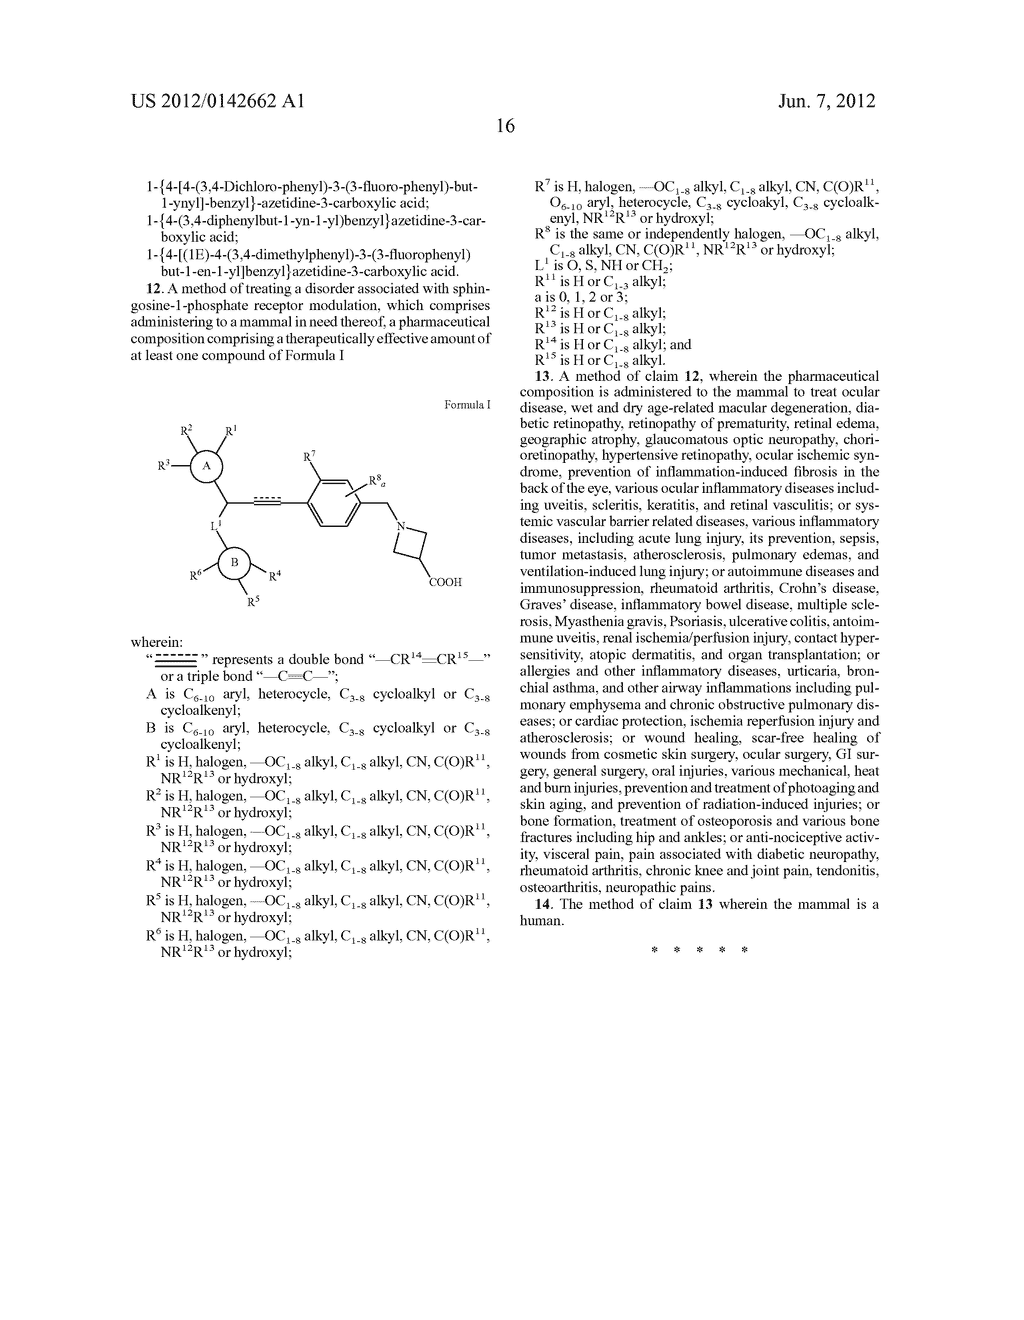 NOVEL AZETIDINE DERIVATIVES AS SPHINGOSINE 1-PHOSPHATE (S1P) RECEPTOR     MODULATORS - diagram, schematic, and image 17